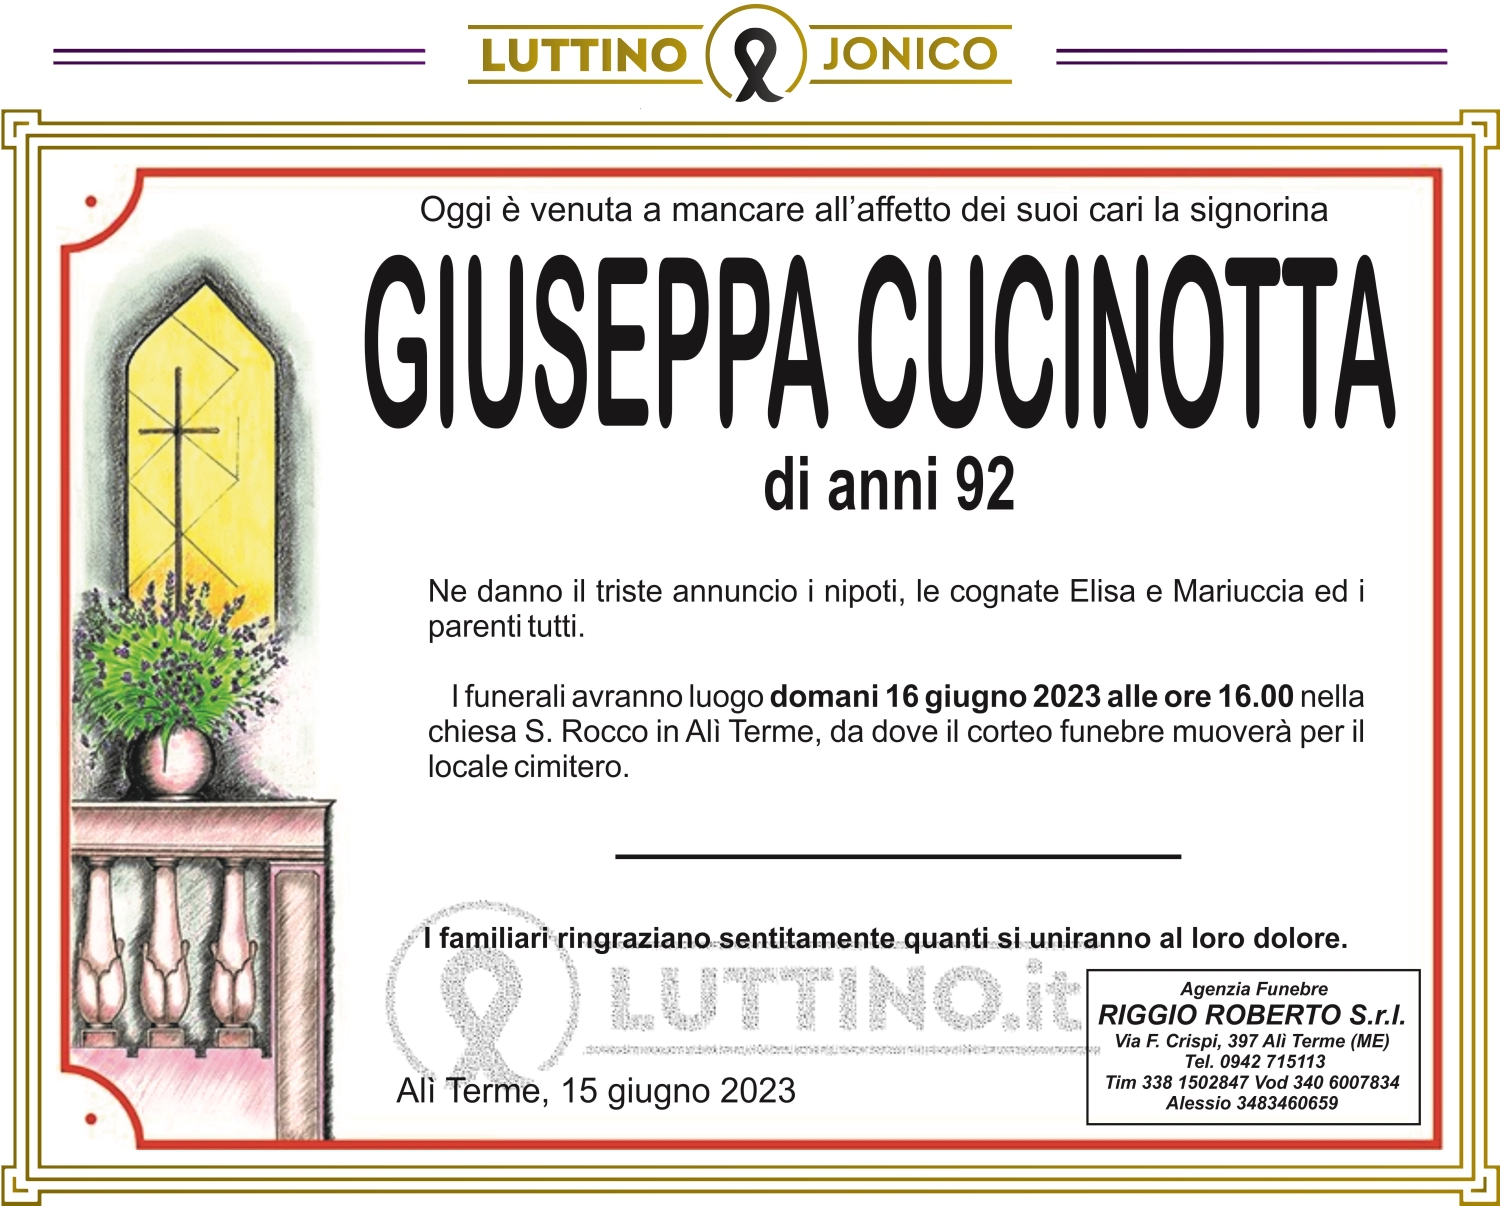 Giuseppa Cucinotta